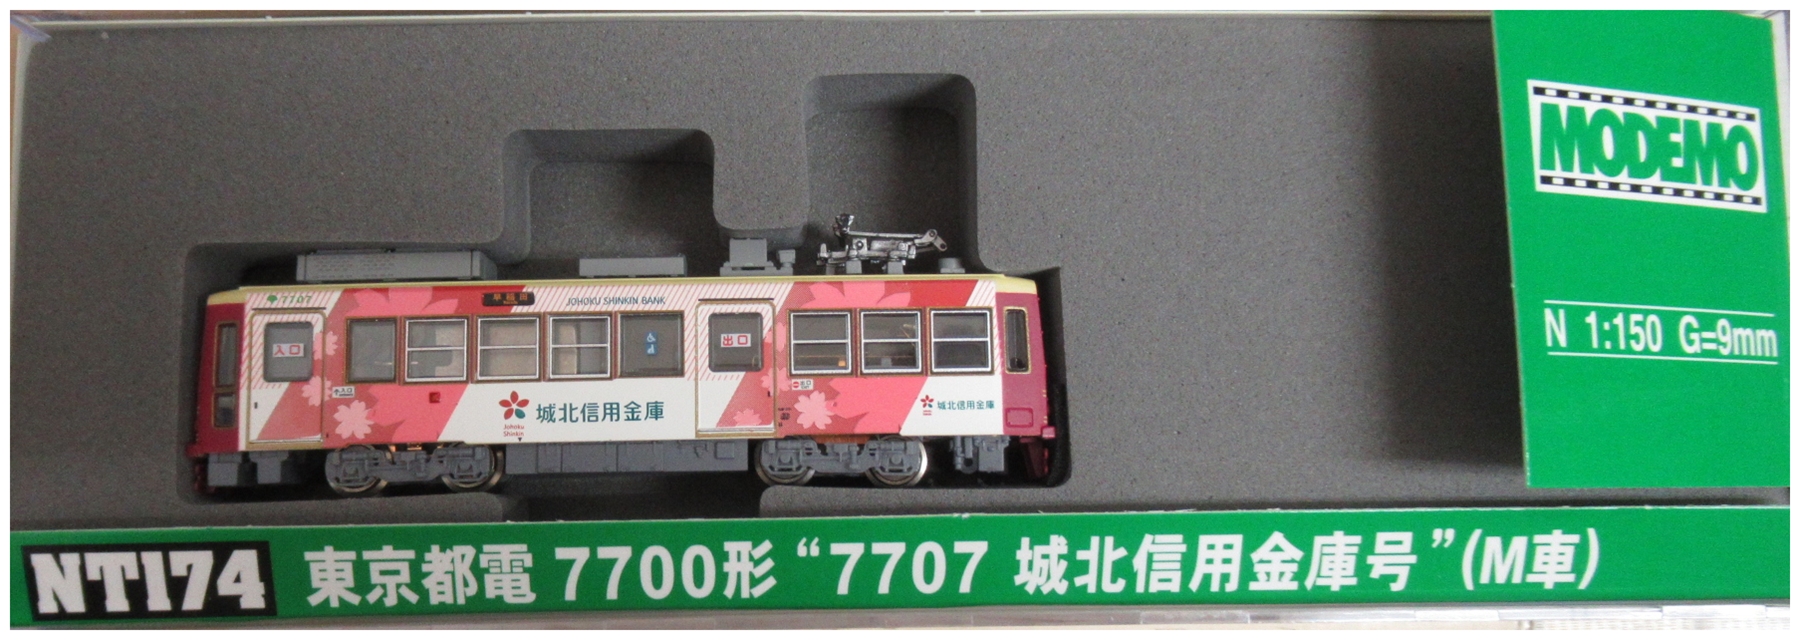 限定】MODEMO モデモ NT174 東京都電 7700形 城北信用金庫号 - 鉄道模型